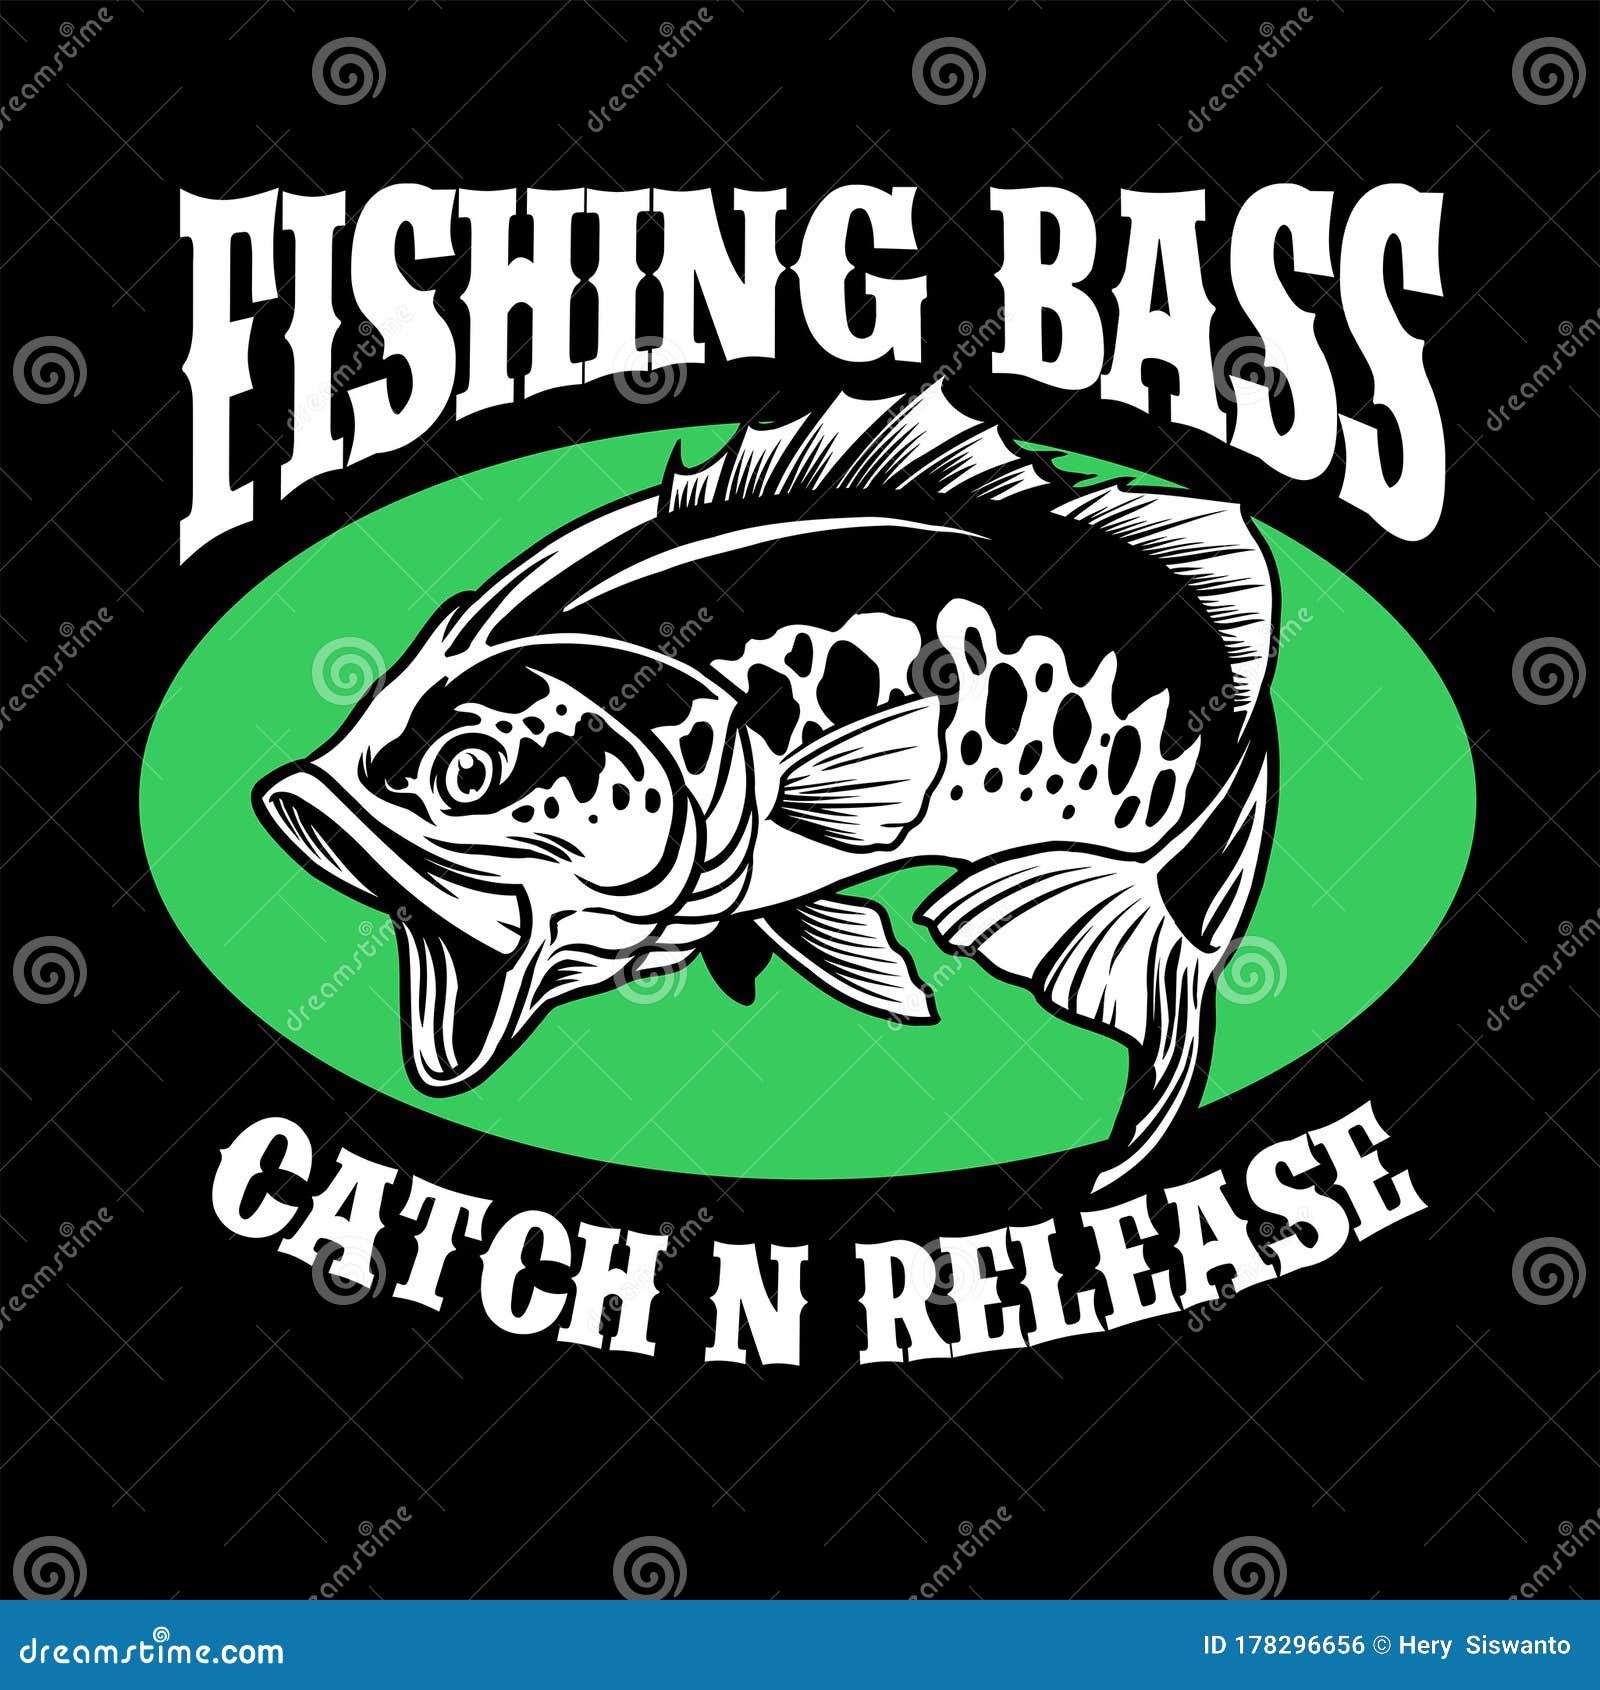 Fishing Shirt Design of Largemouth Bass Fish Stock Vector